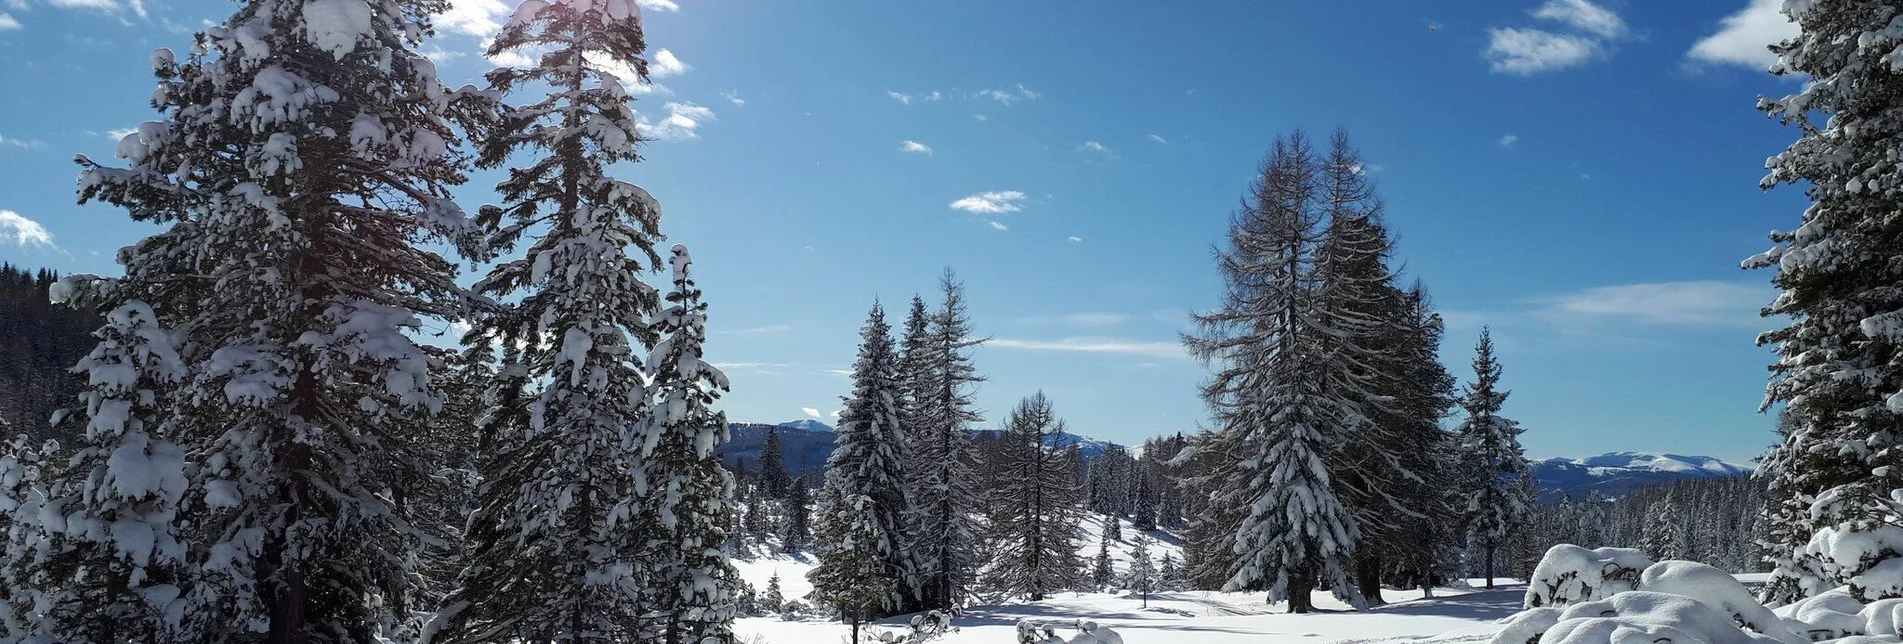 Winterwandern Badesee Krakaudorf - Touren-Impression #1 | © Tourismusverband Region Murau